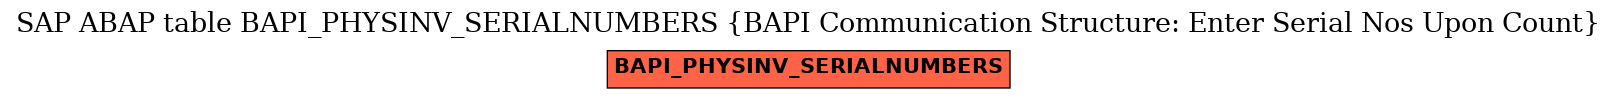 E-R Diagram for table BAPI_PHYSINV_SERIALNUMBERS (BAPI Communication Structure: Enter Serial Nos Upon Count)